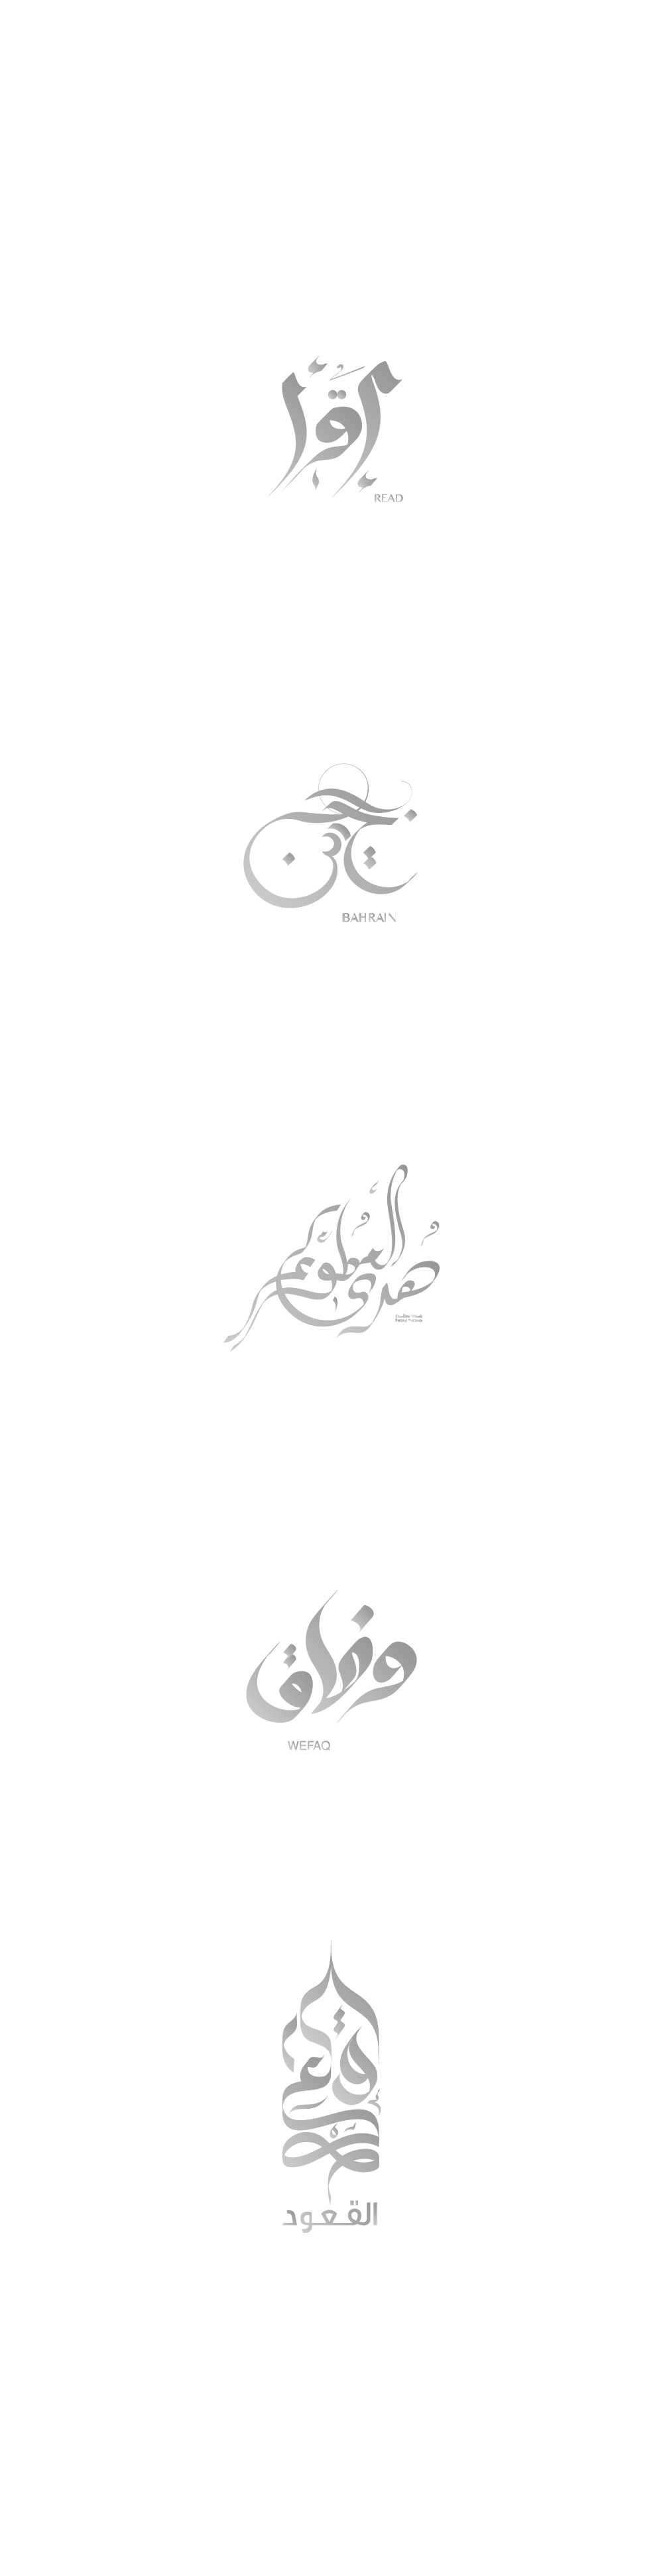 typo logo arabic fonts calligrapher Bahrain type